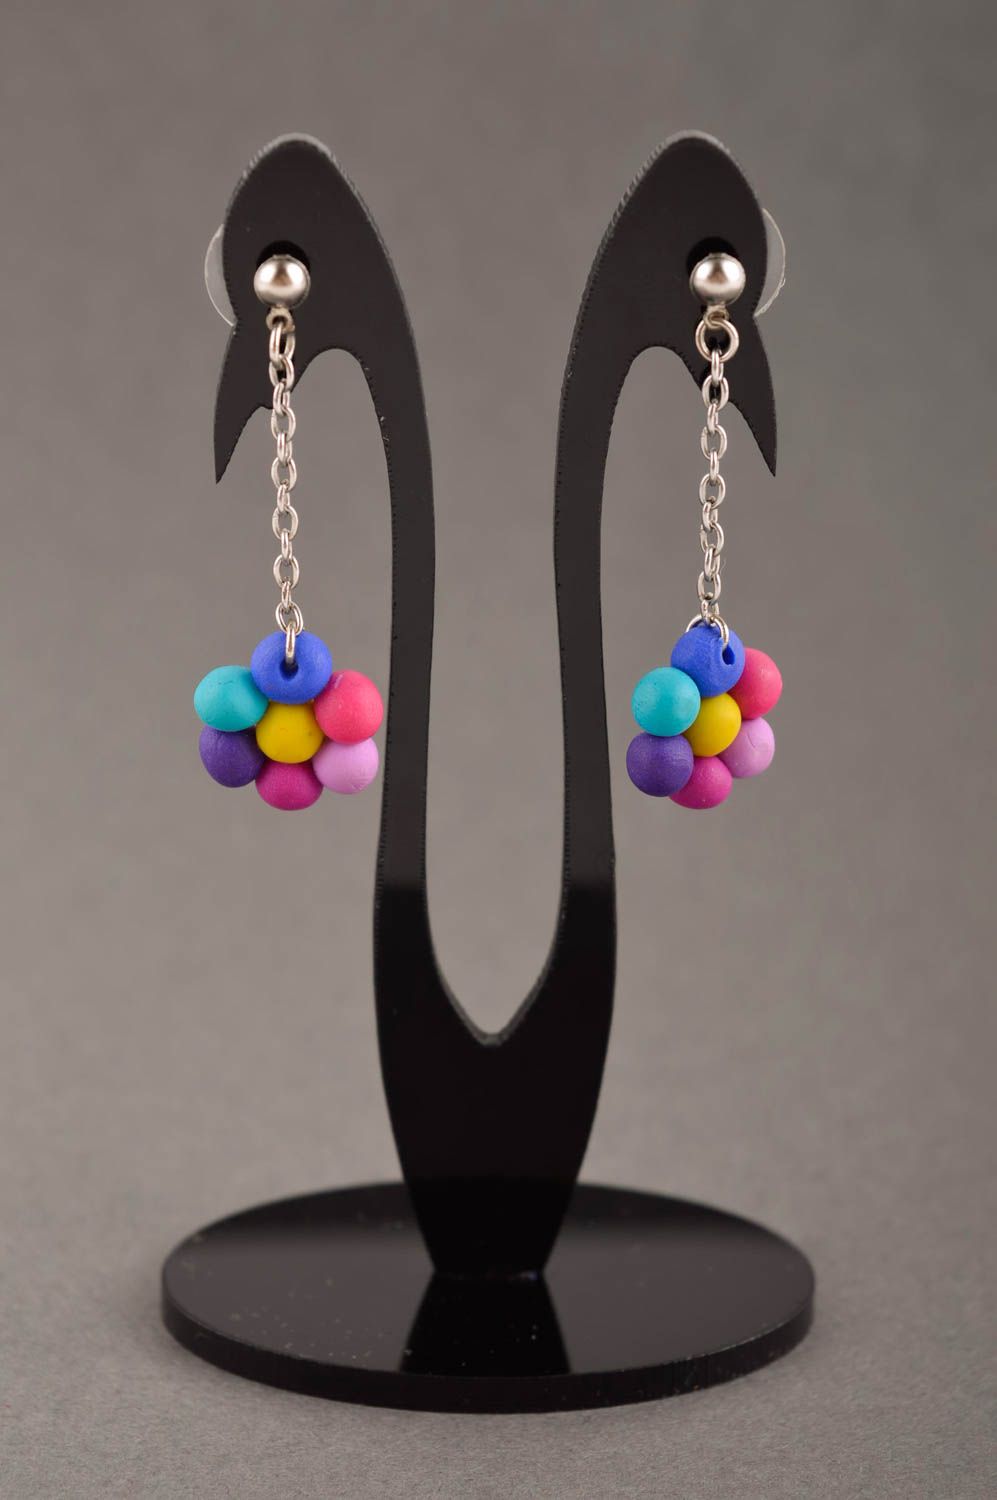 Handmade earrings designer earrings polymer clay jewelry unusual gift for women photo 1